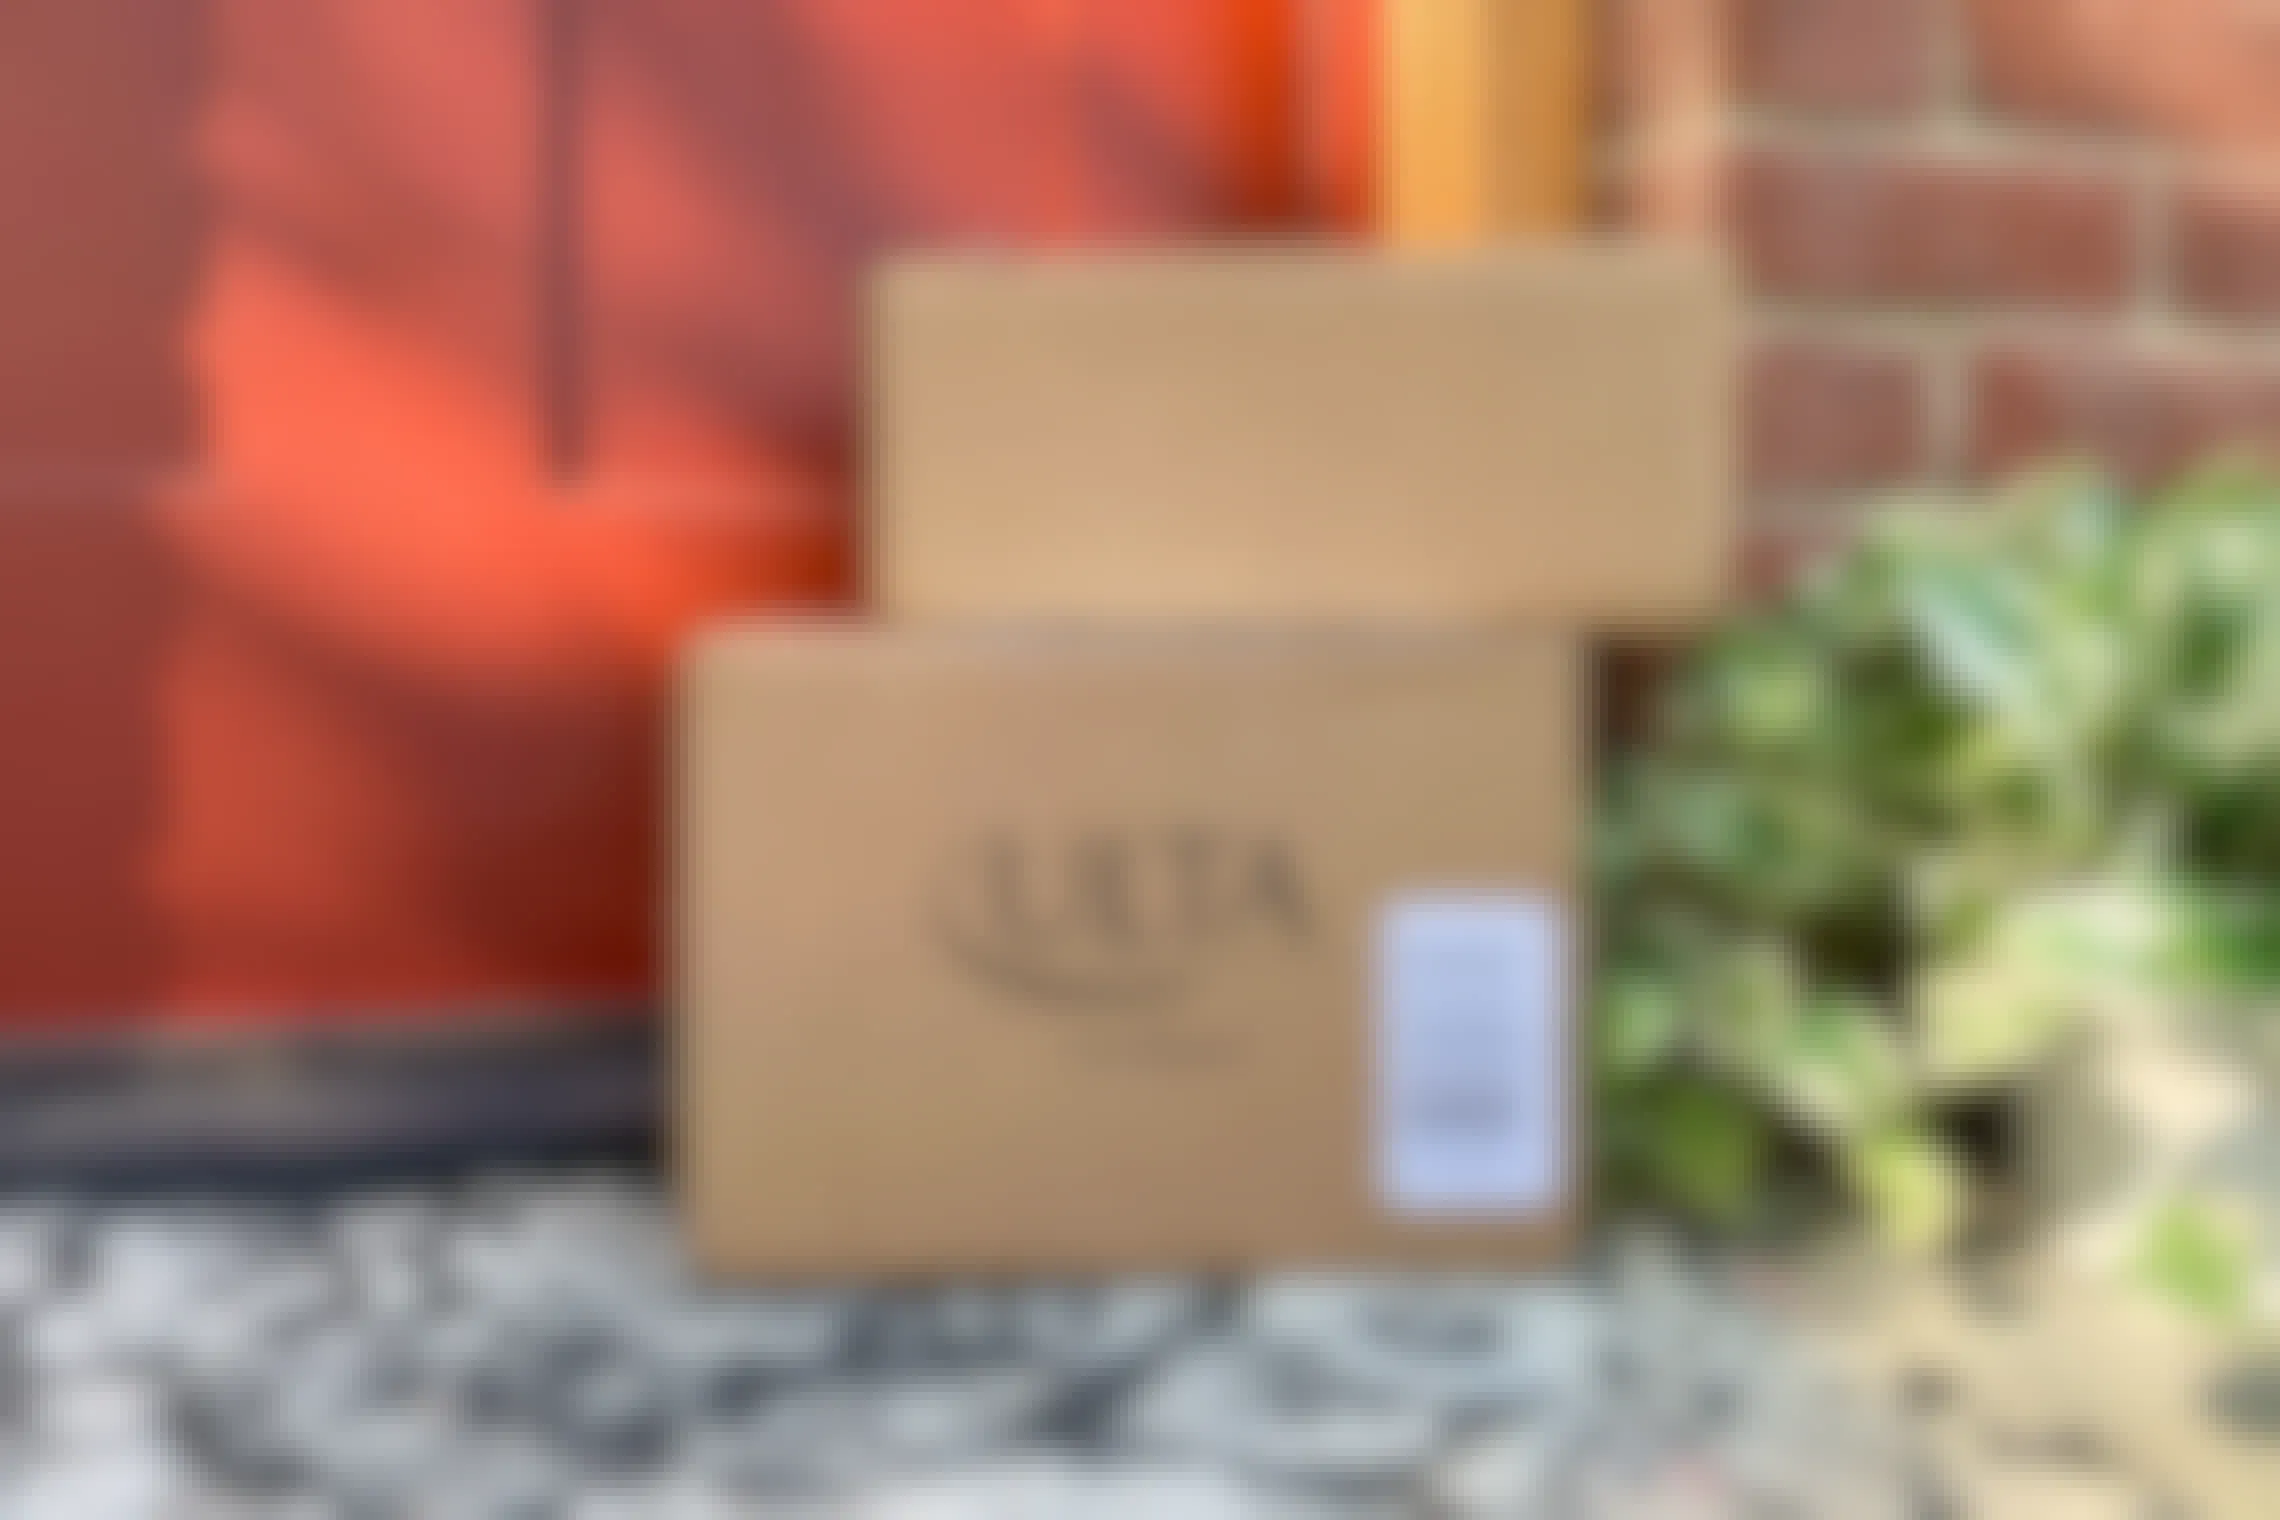 Ulta box sitting on doorstep